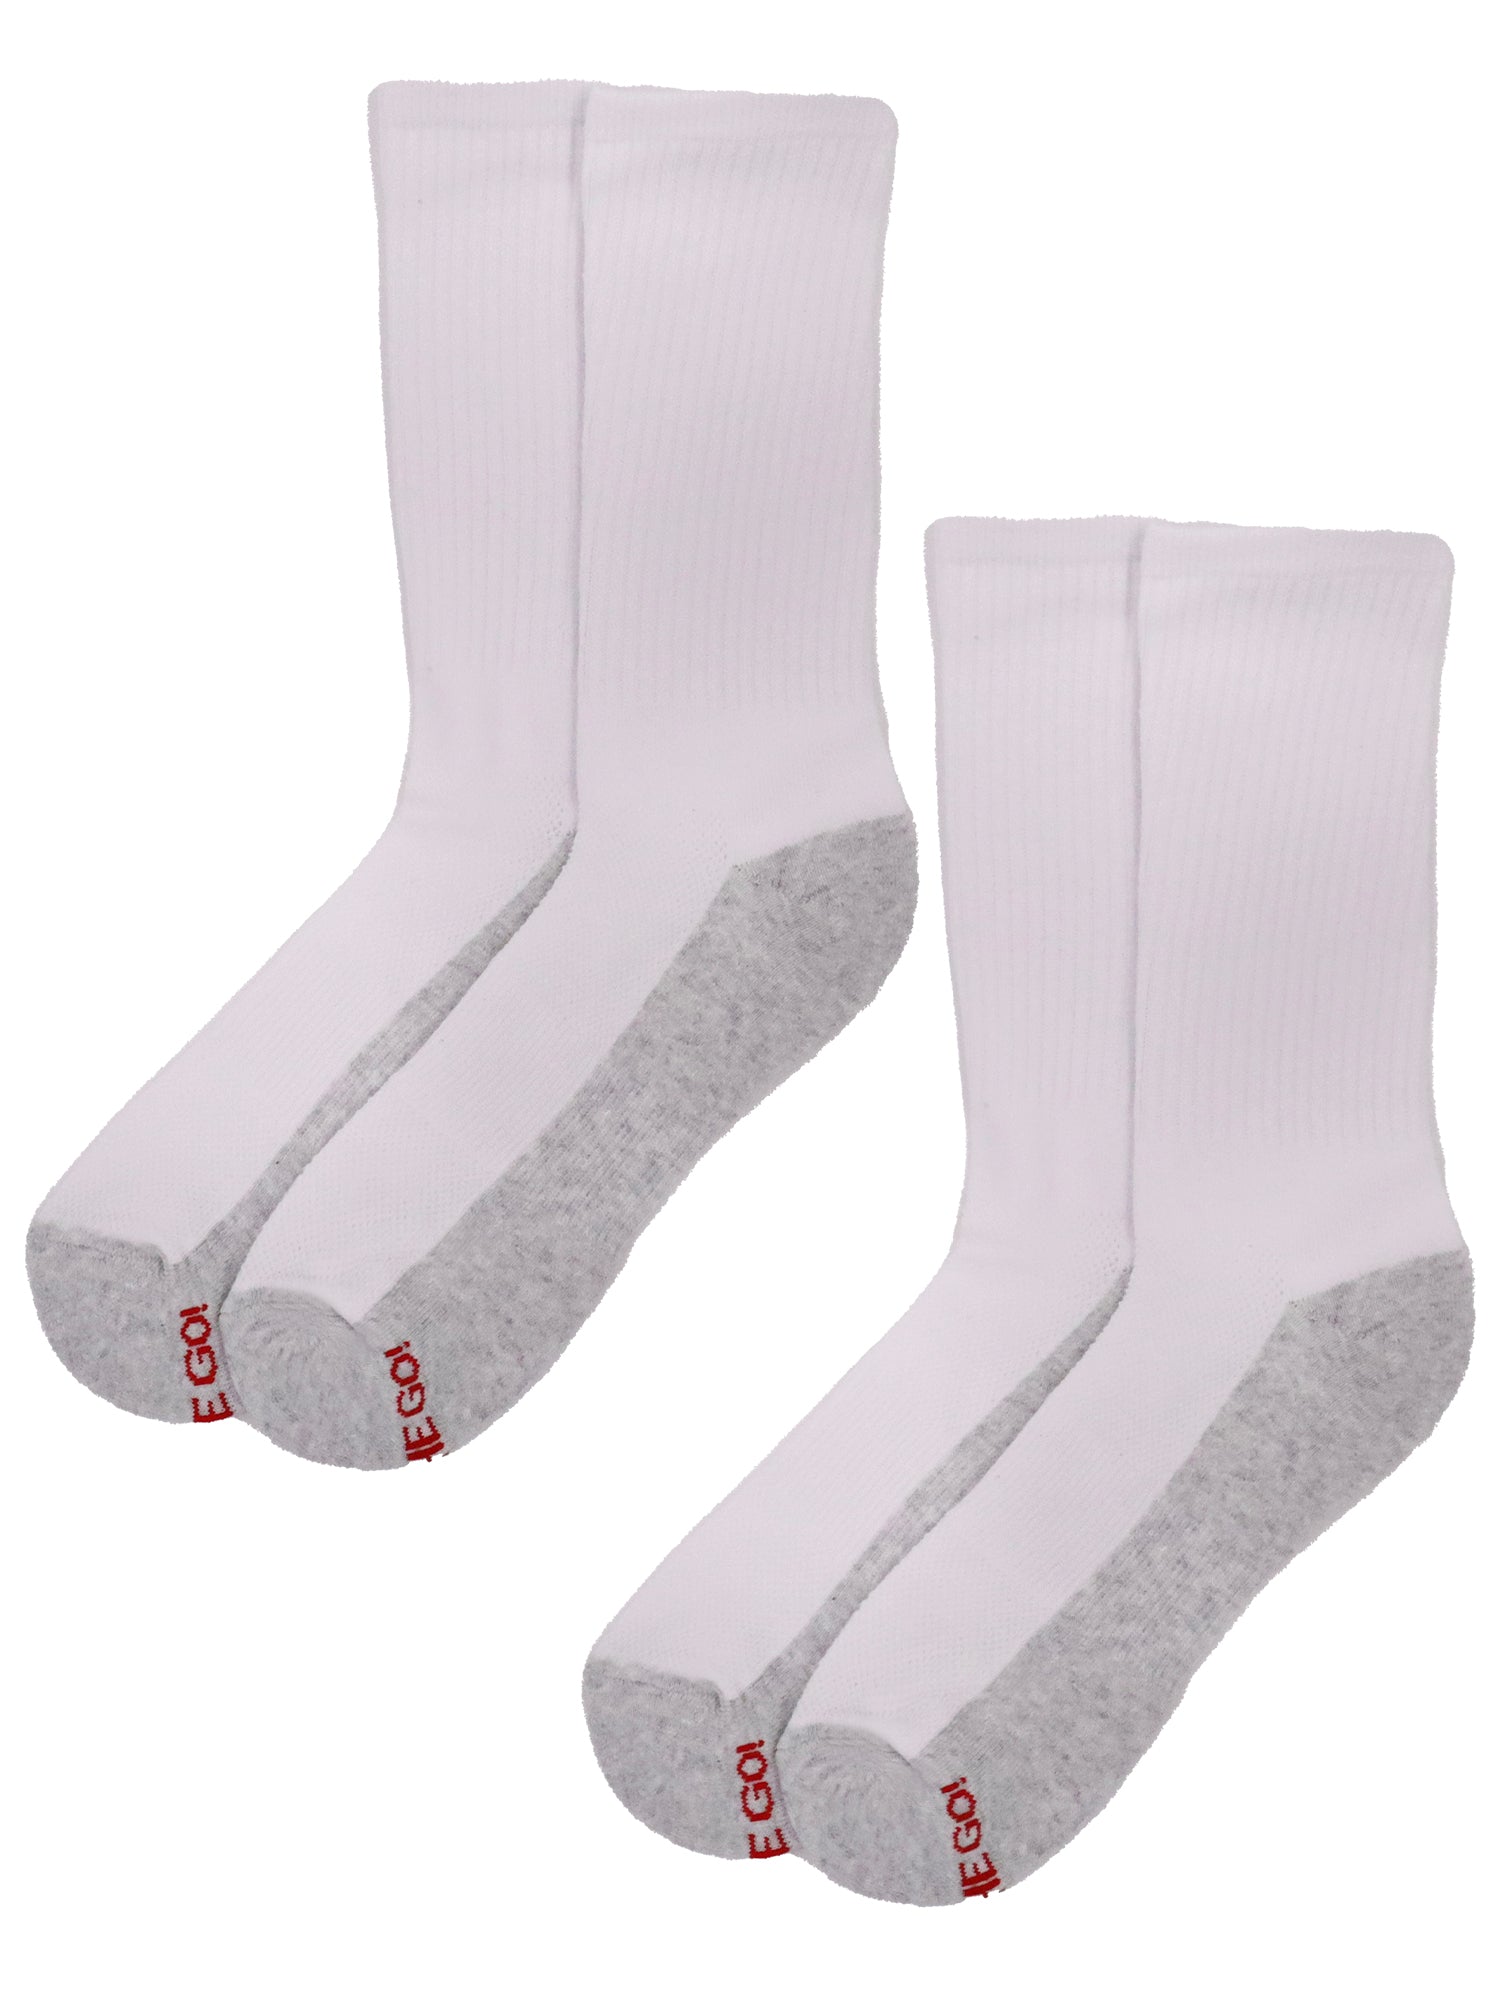 Cushion Fashion No Show Socks- Speckle Heel/Toe Design (2 Pair Pack)-  Women's Socks - On The Go Hosiery